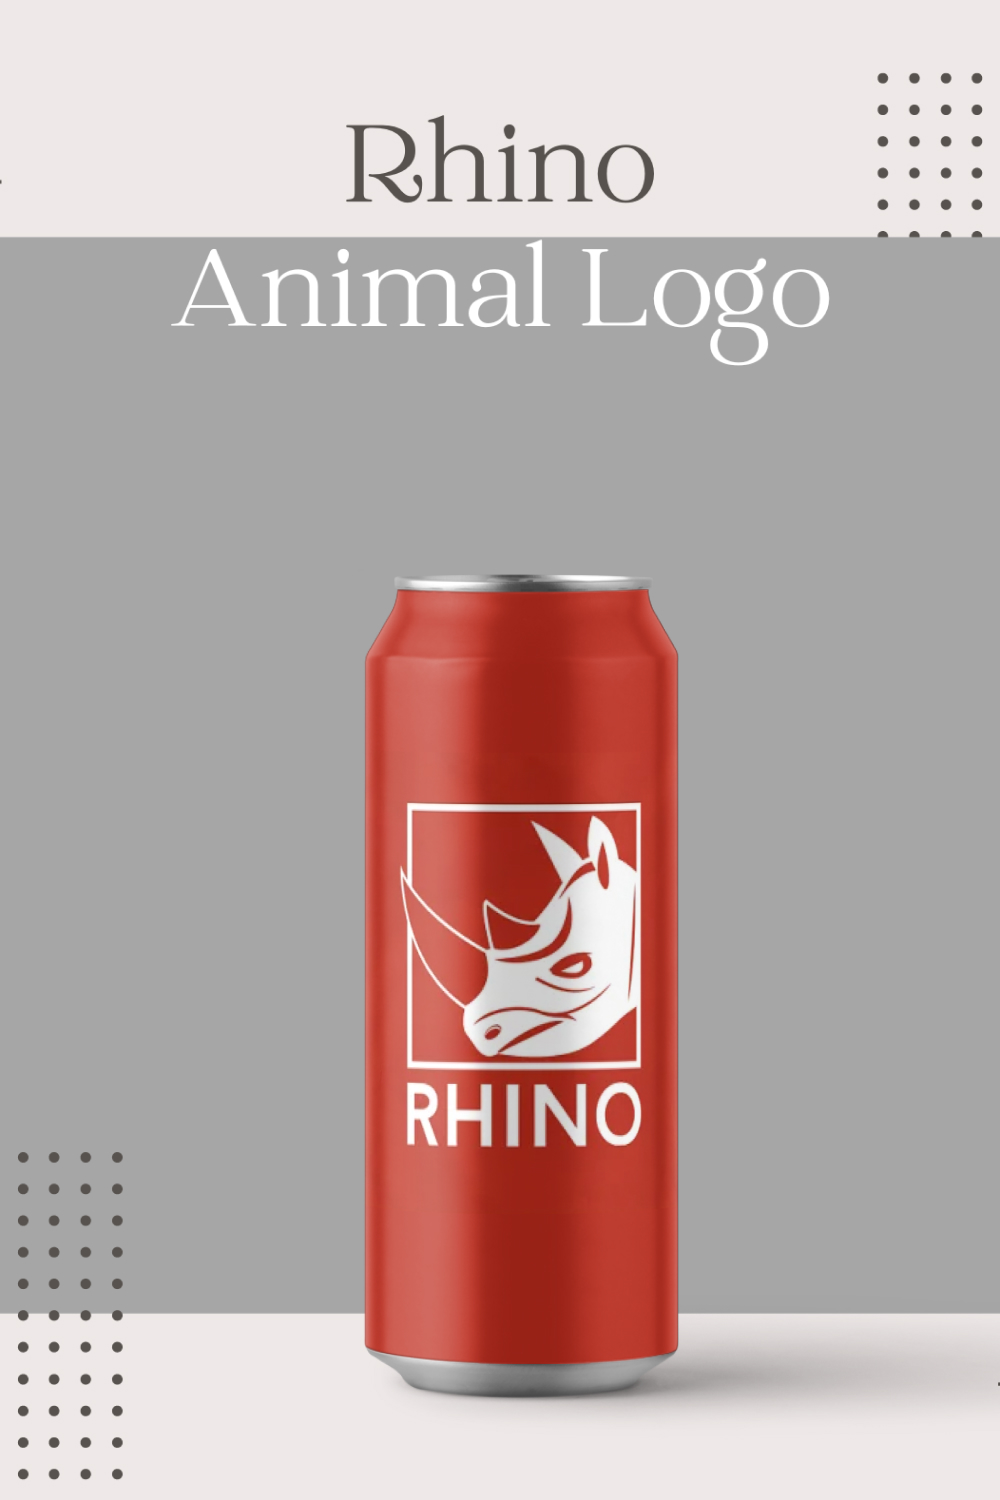 rhino animal logo 1 805